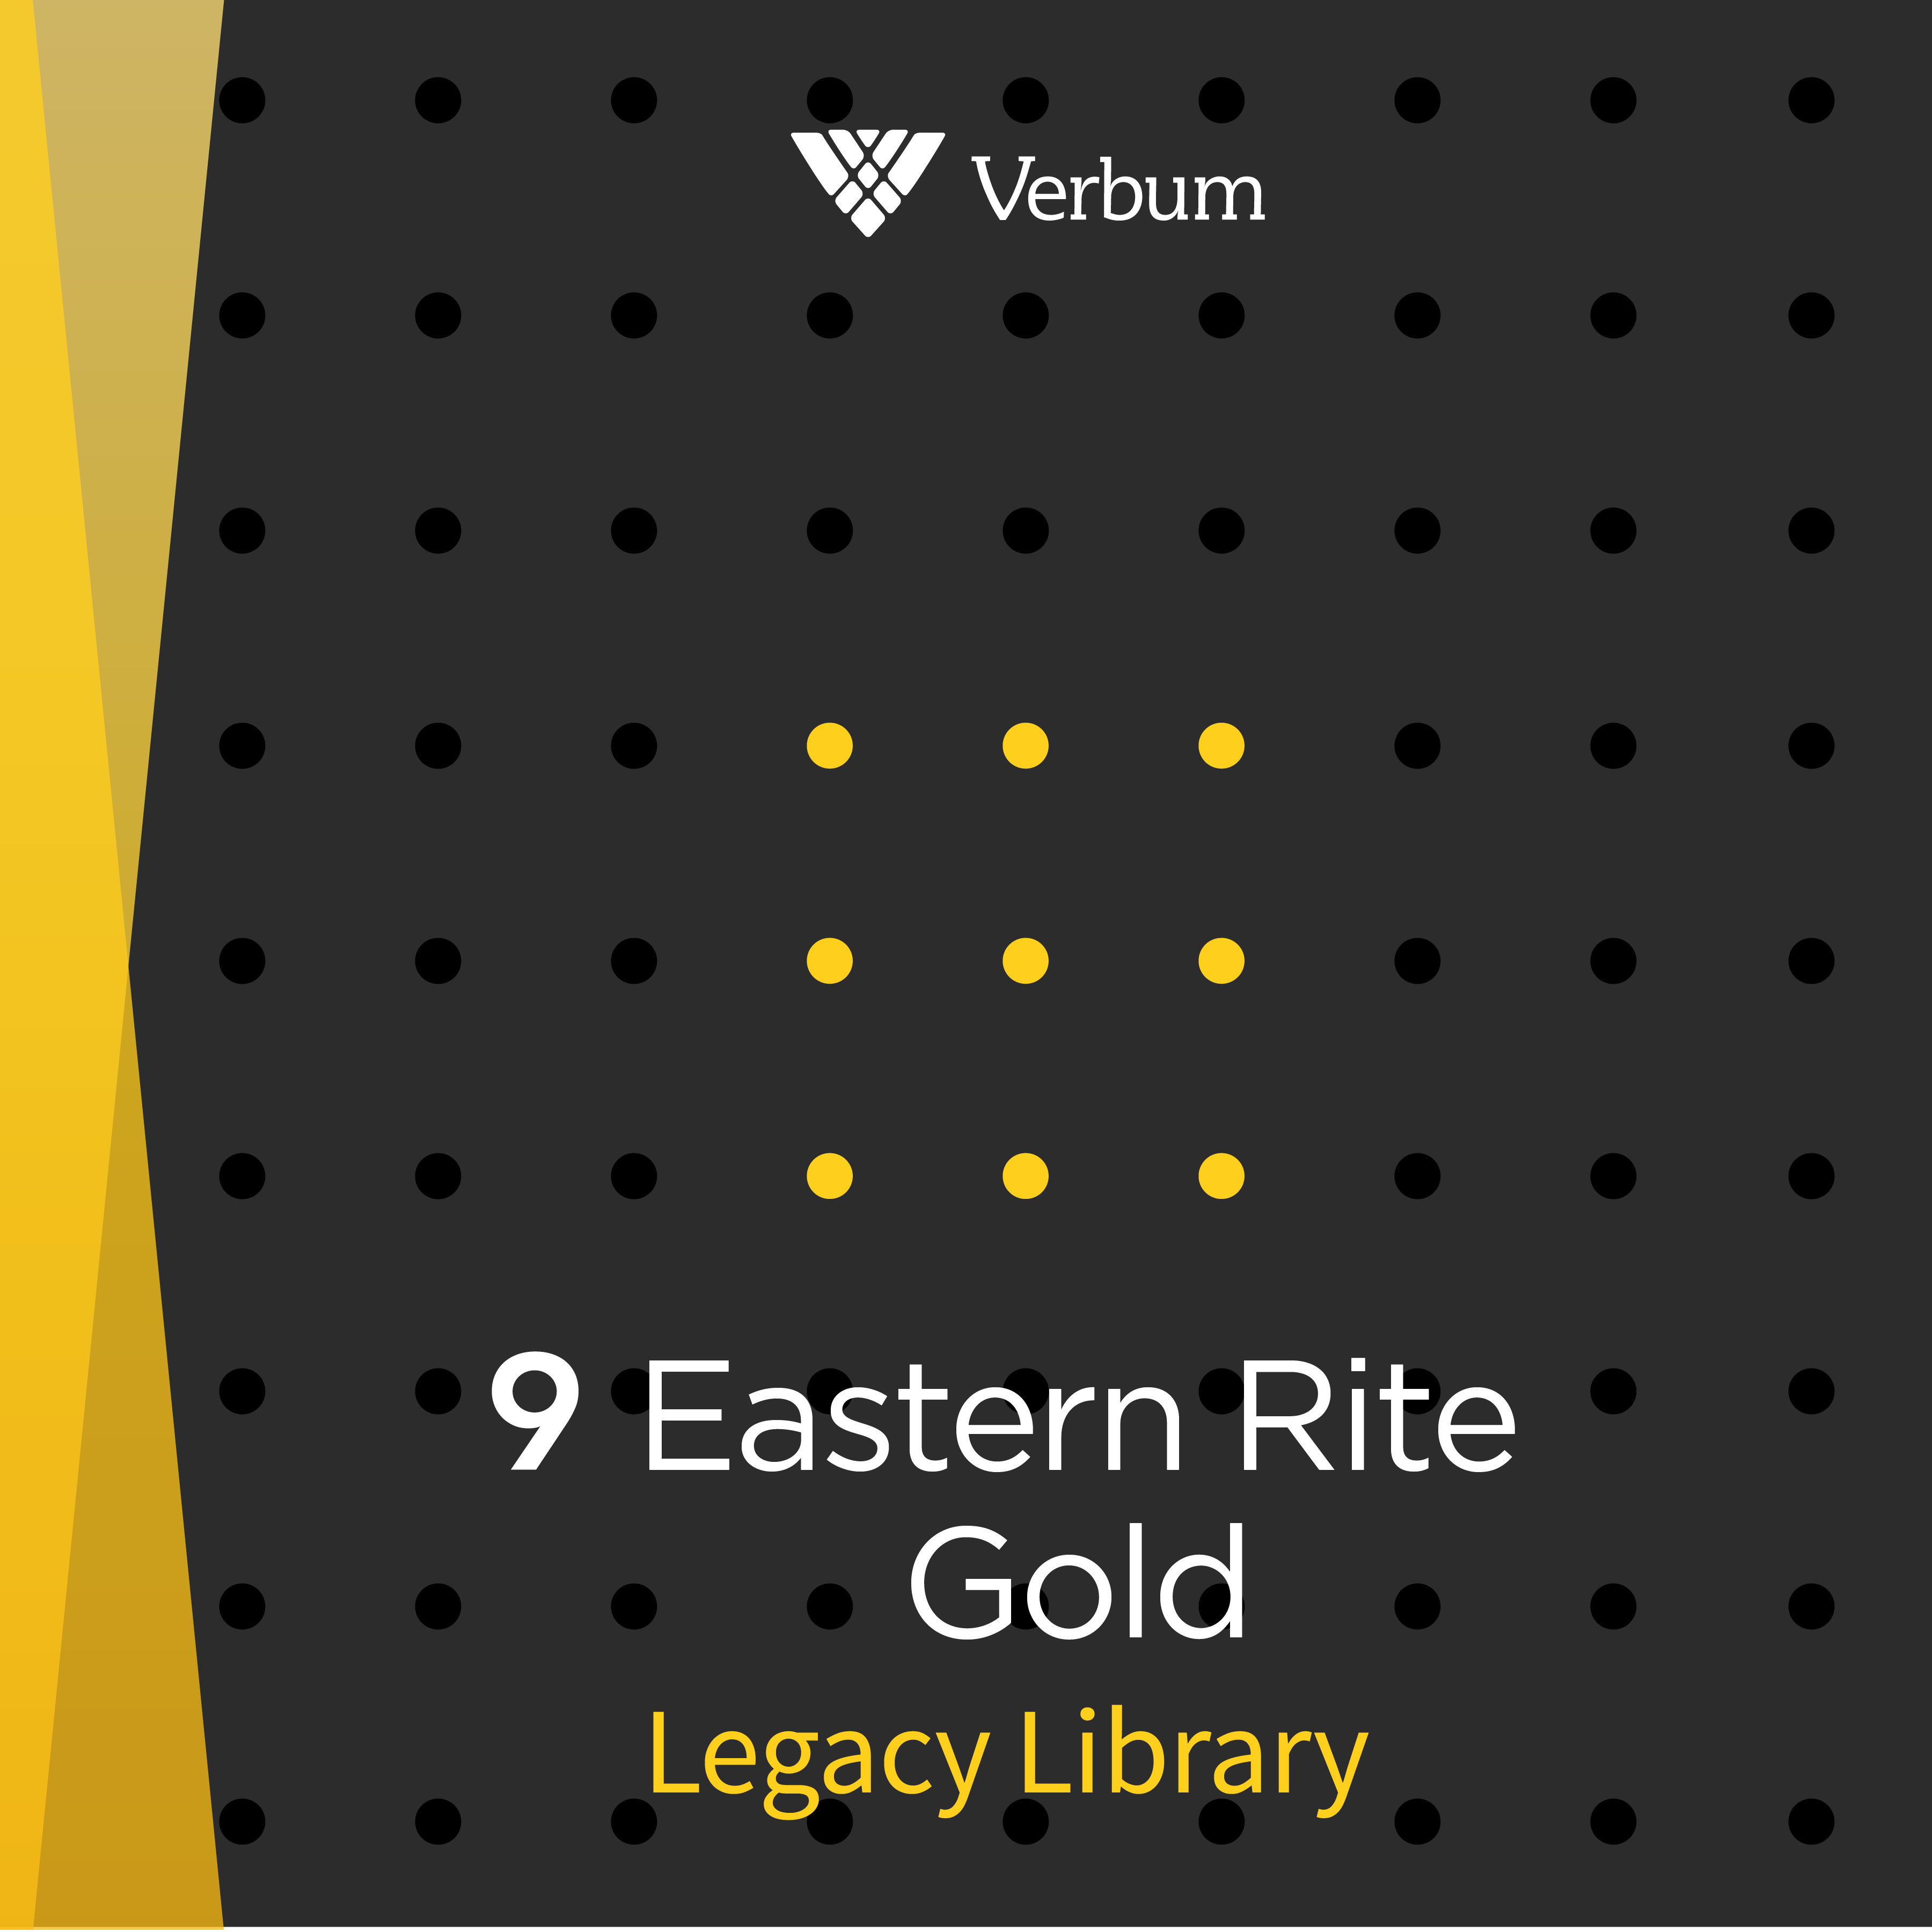 Verbum 9 Eastern Rite Gold Legacy Library